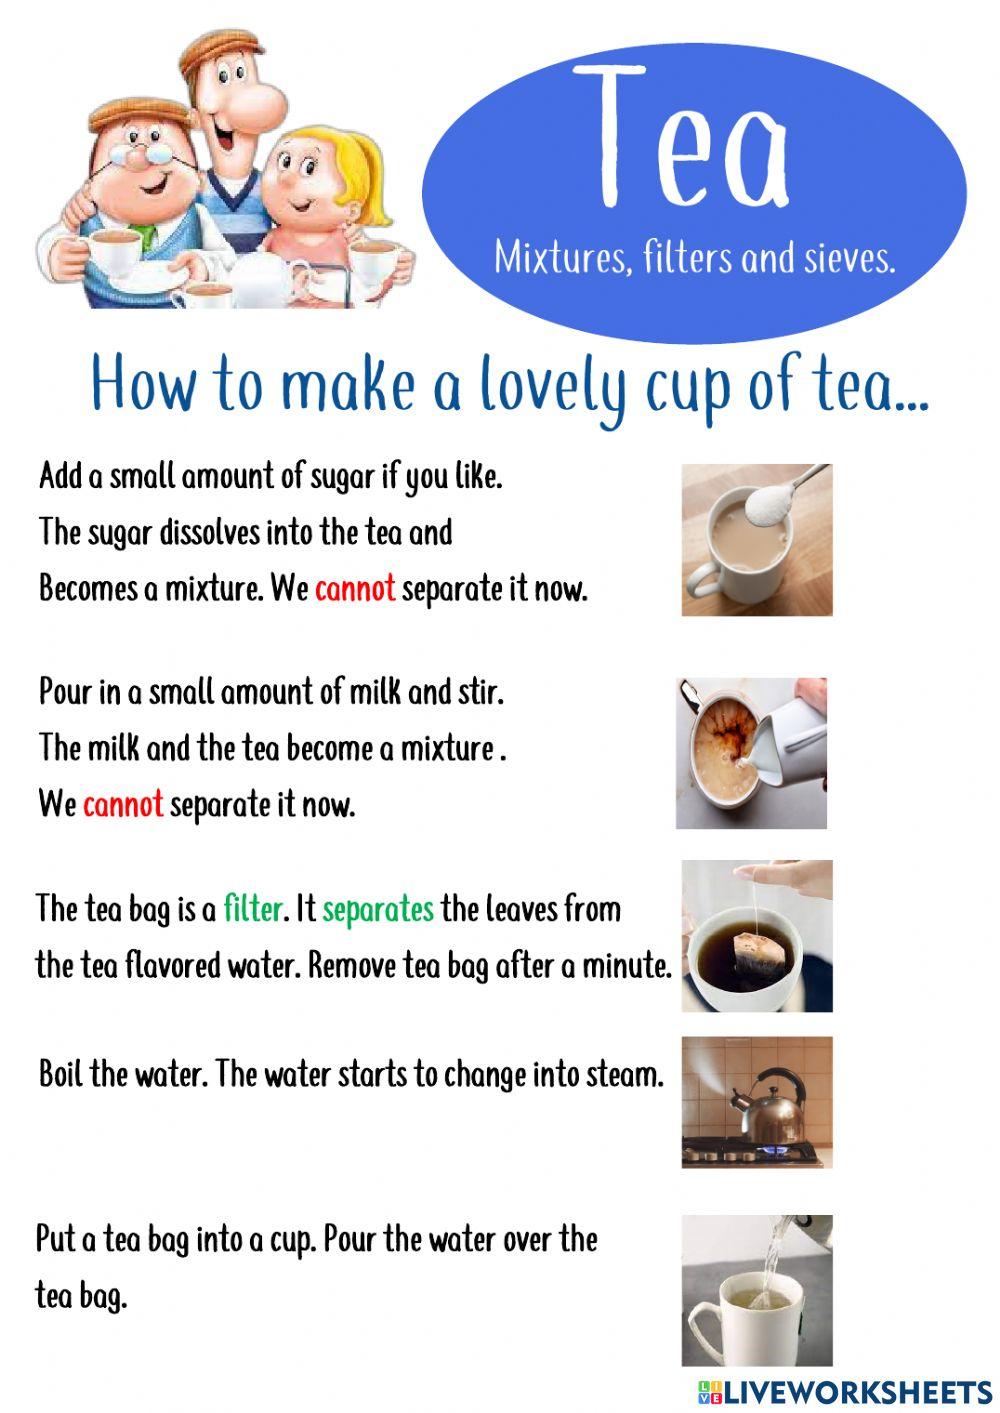 Tea - Mixtures and filters